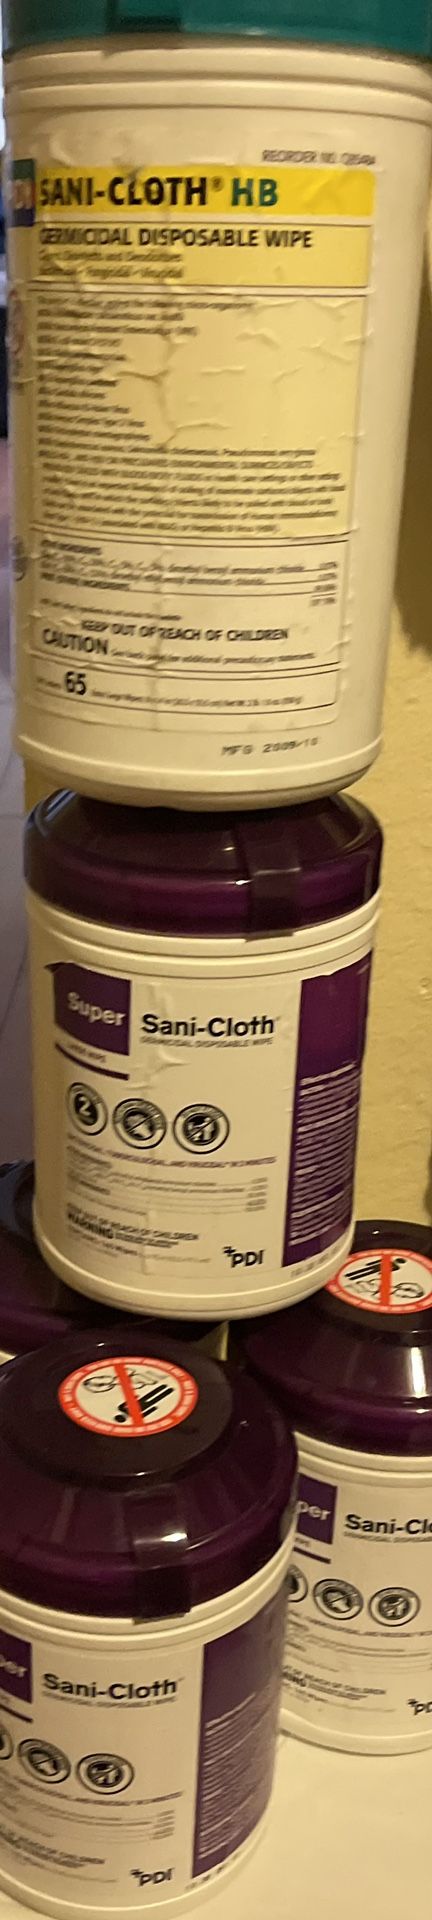 Sani- Cloth Wipes